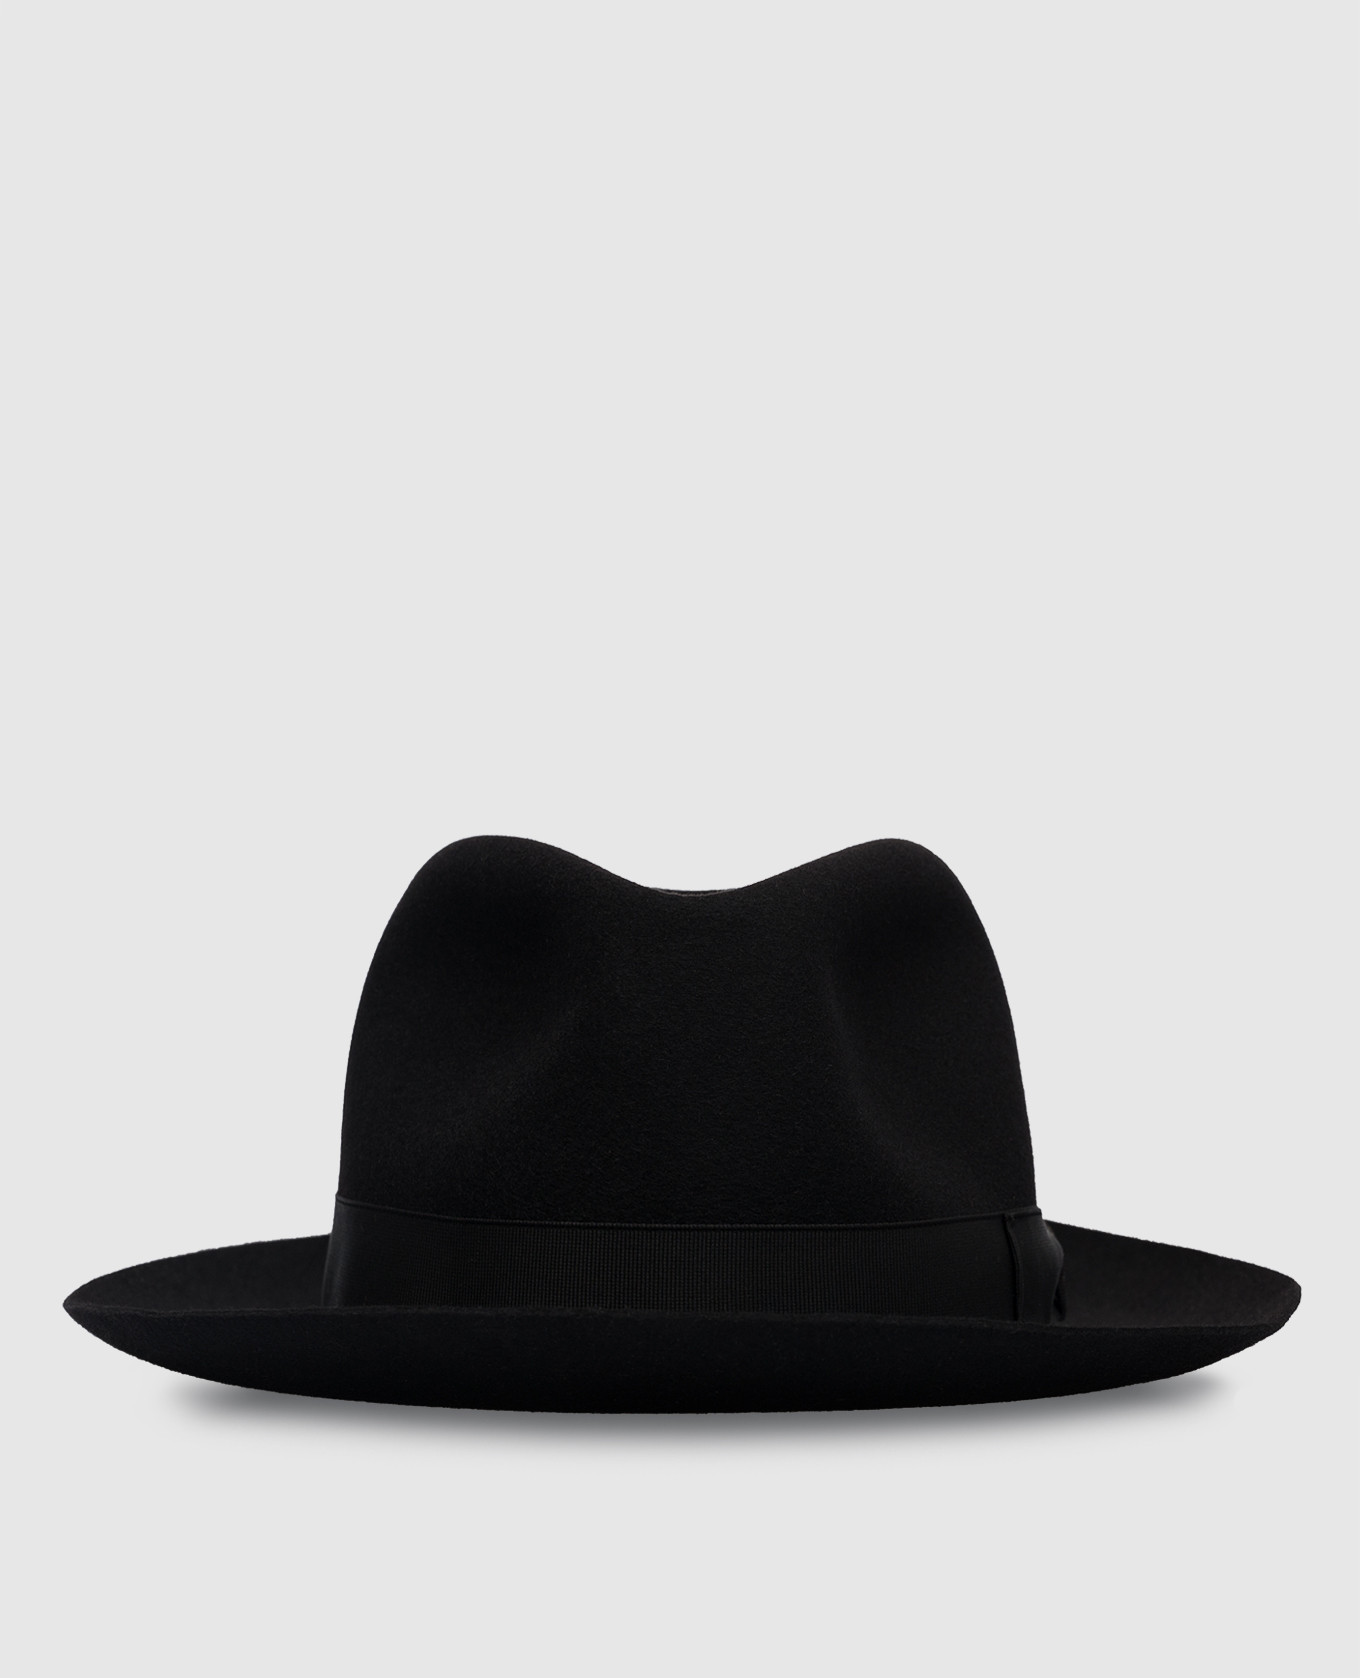 Black hat 50 grams